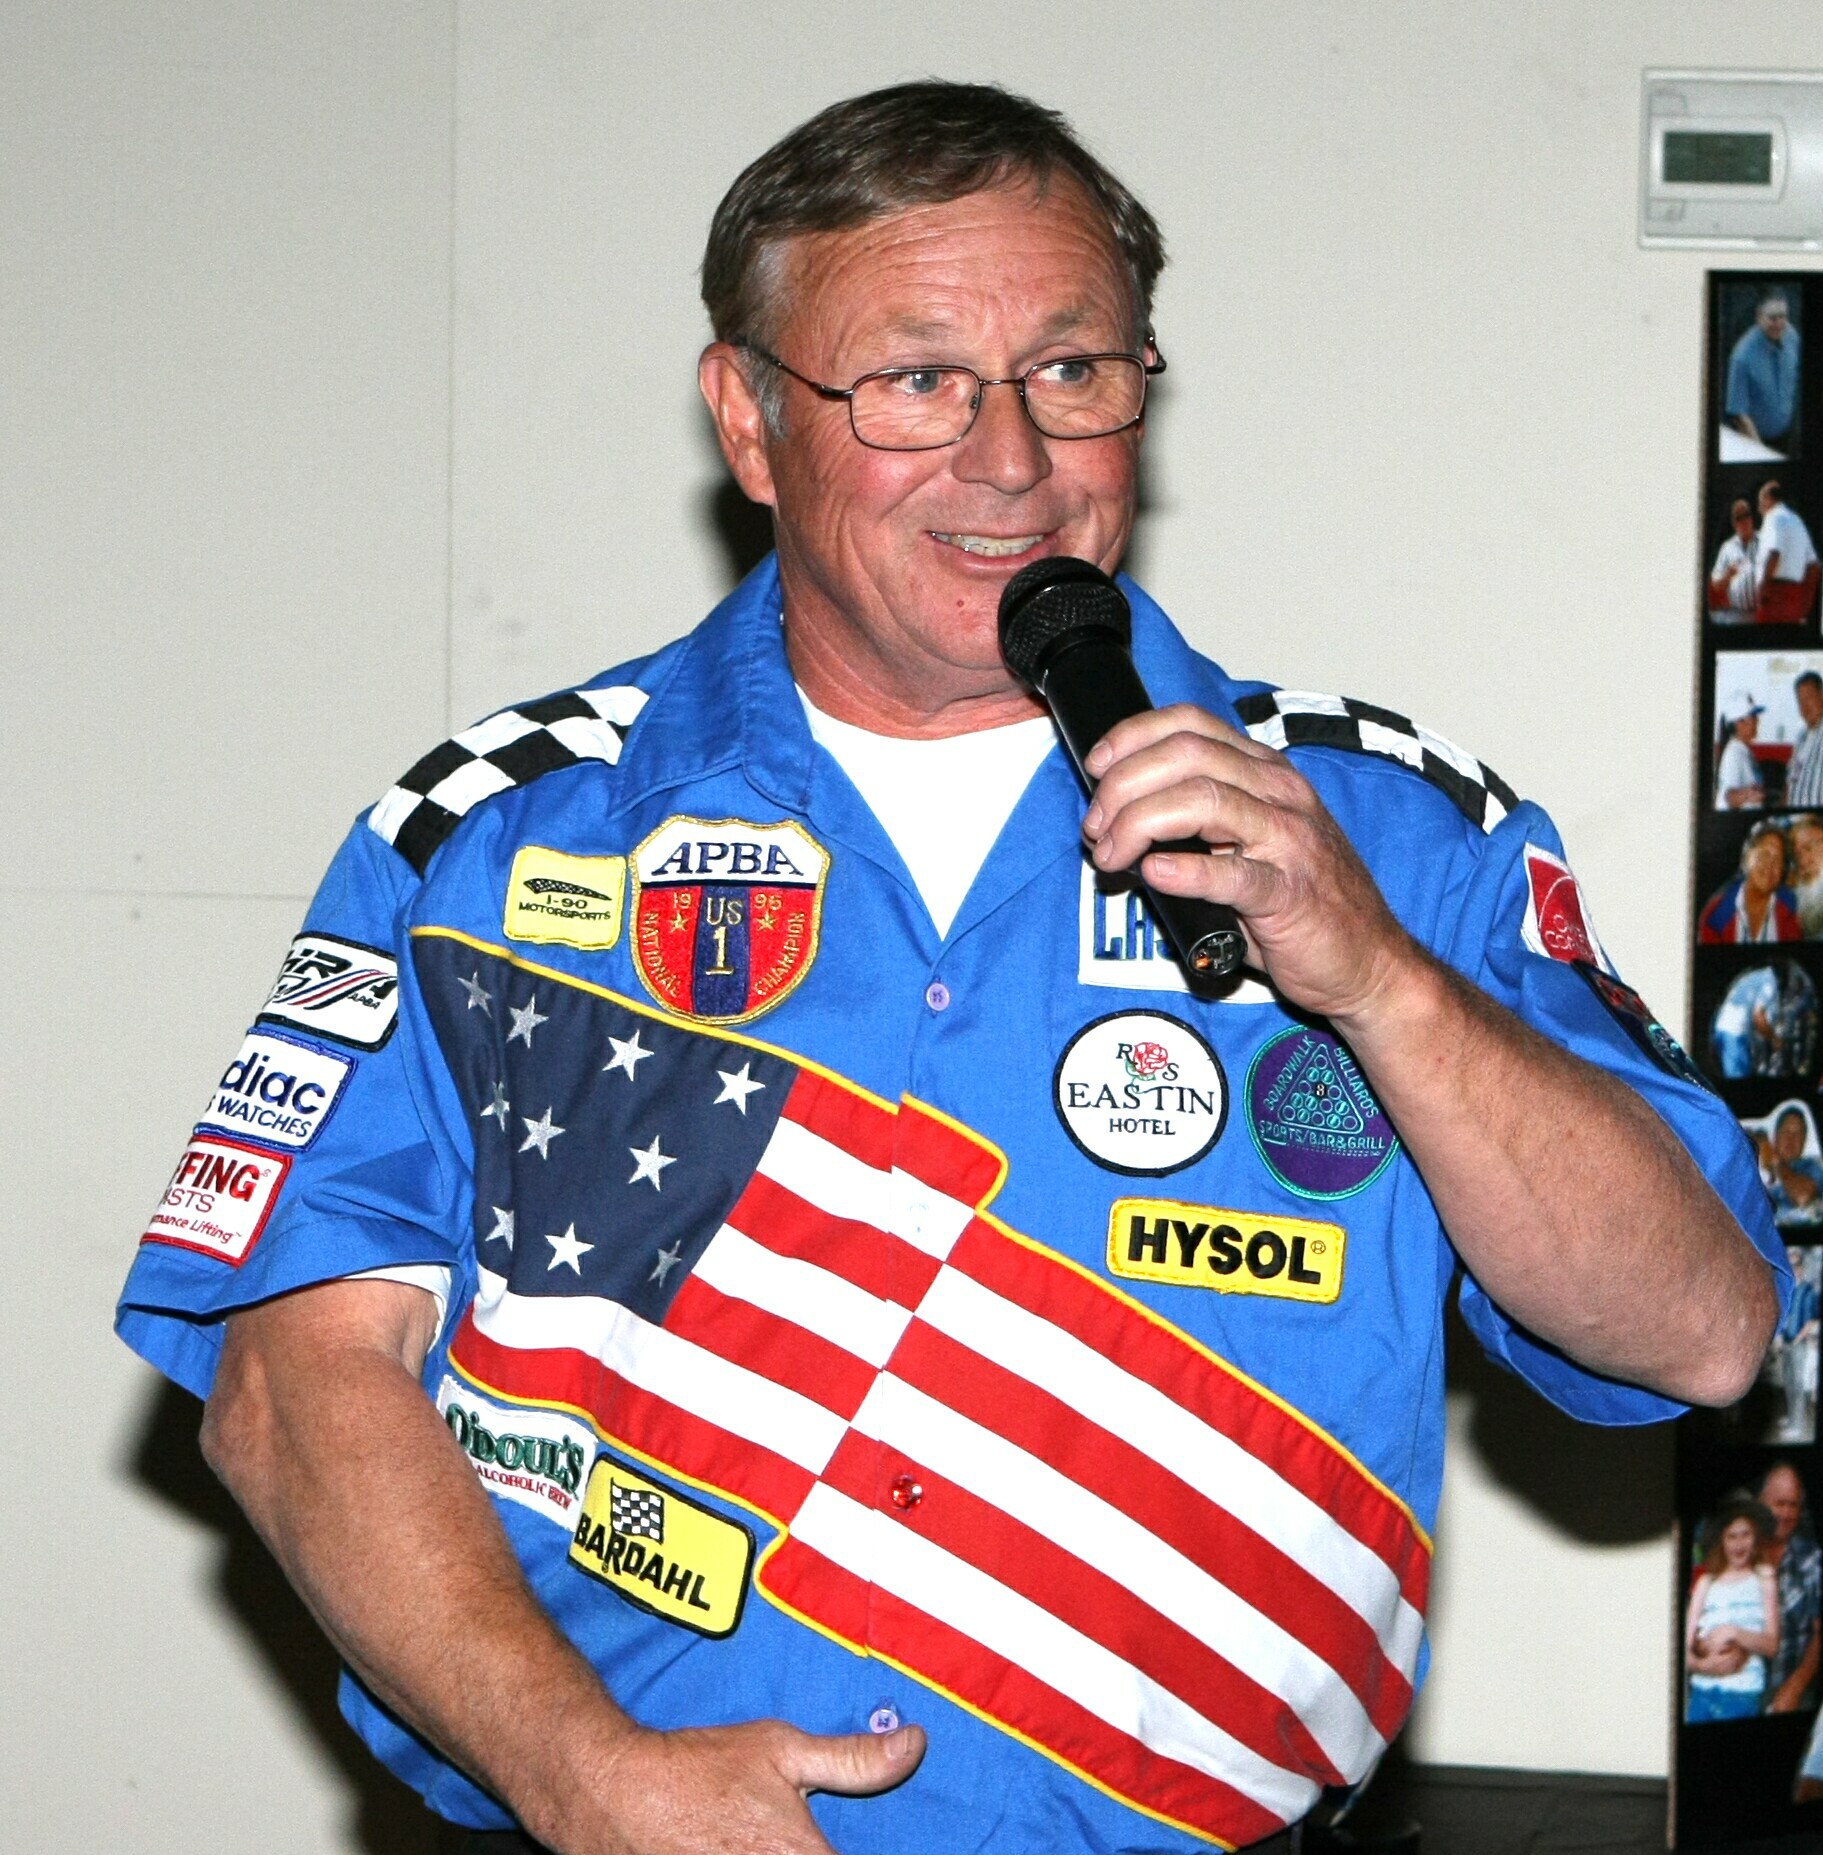 Mark Evans told stories in his PICO American Dream uniform.